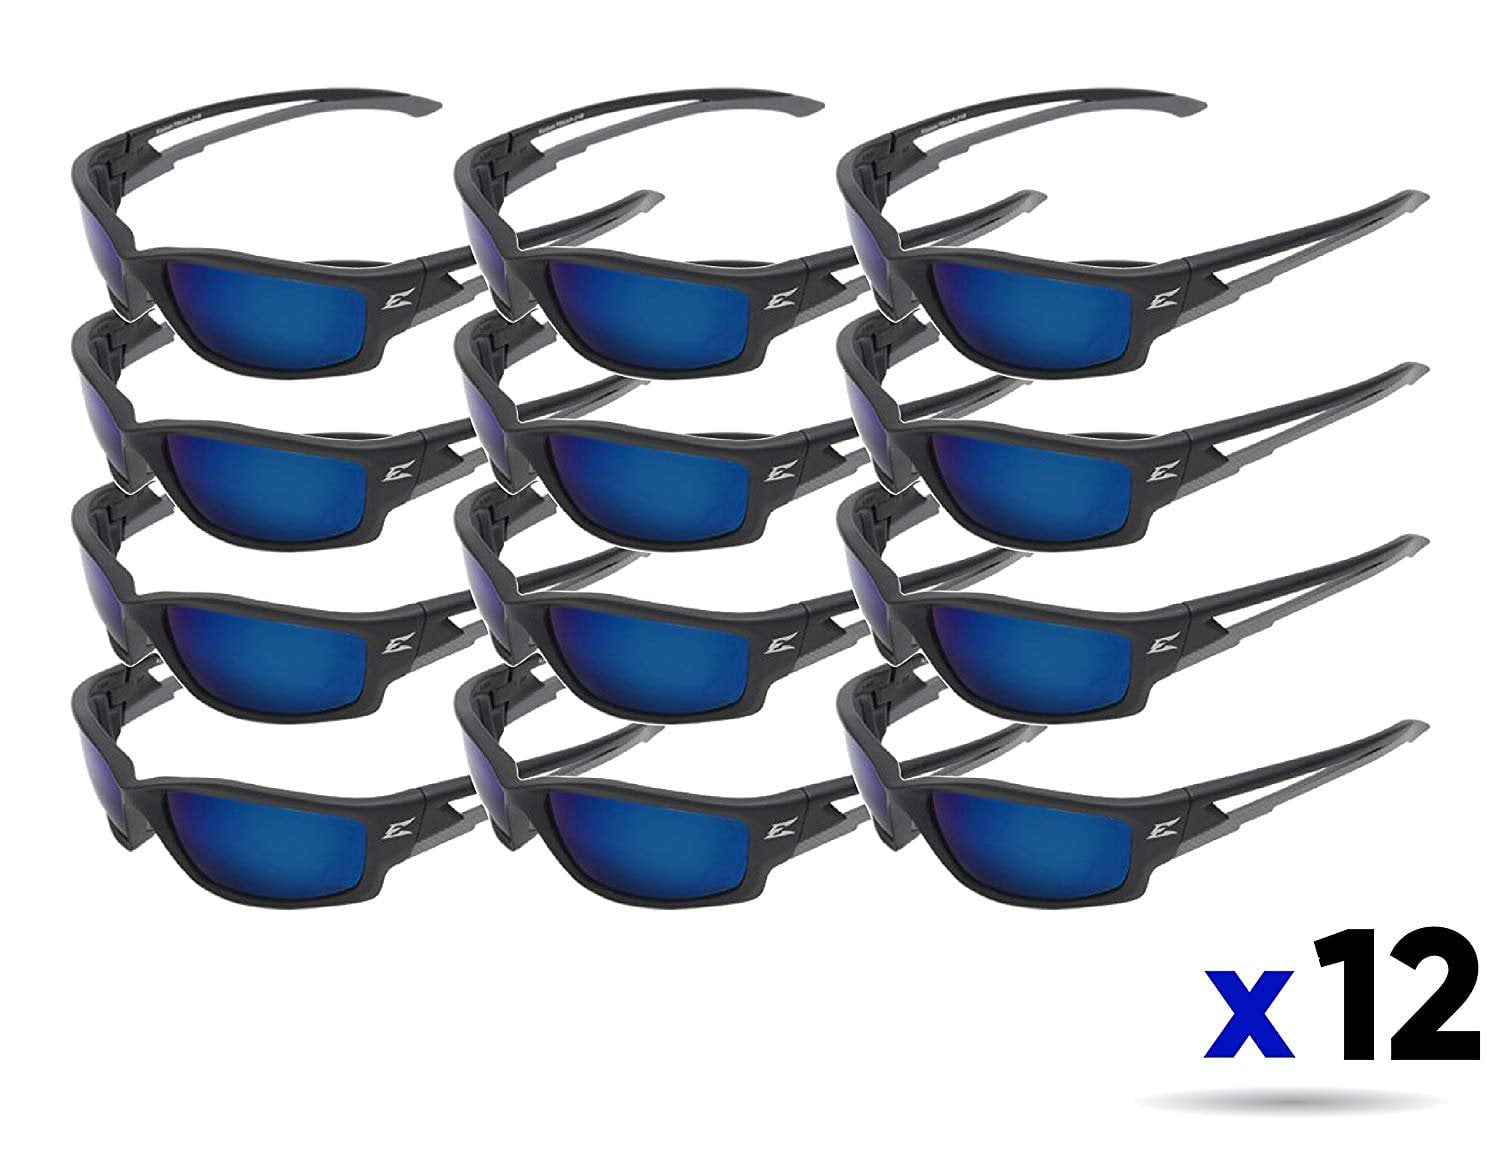 EDGE EYEWEAR TSKAP218 Kazbek Black Polarized Aqua Blue Lens Safety Glasses New